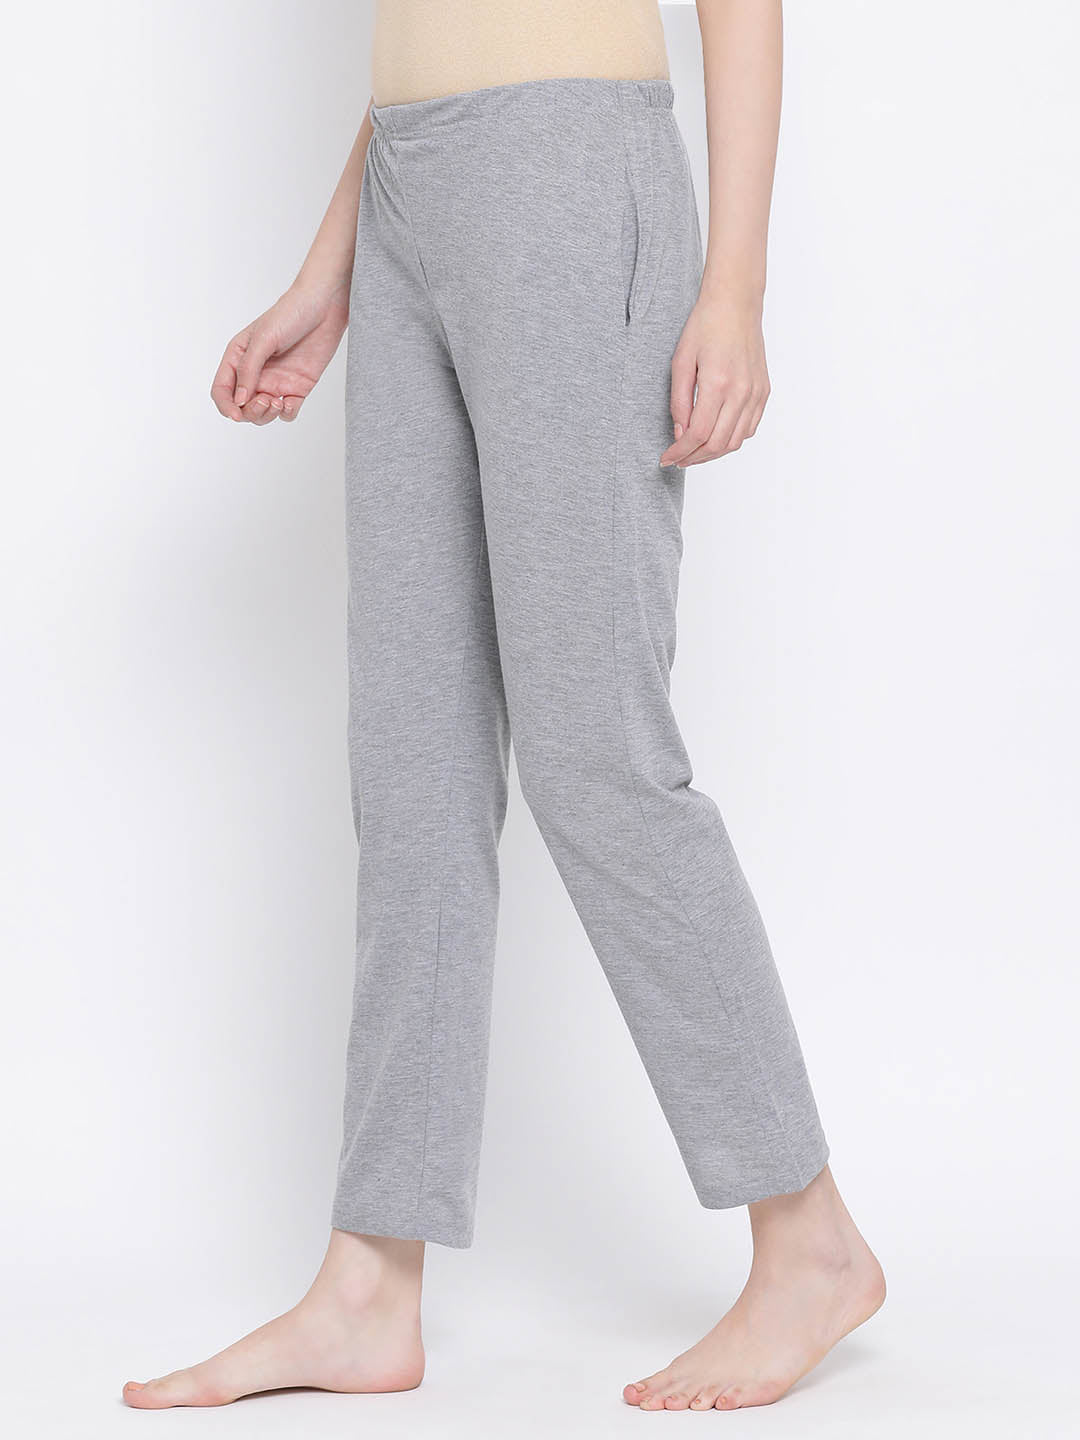 Pyjama With Elastic Waistband In Grey